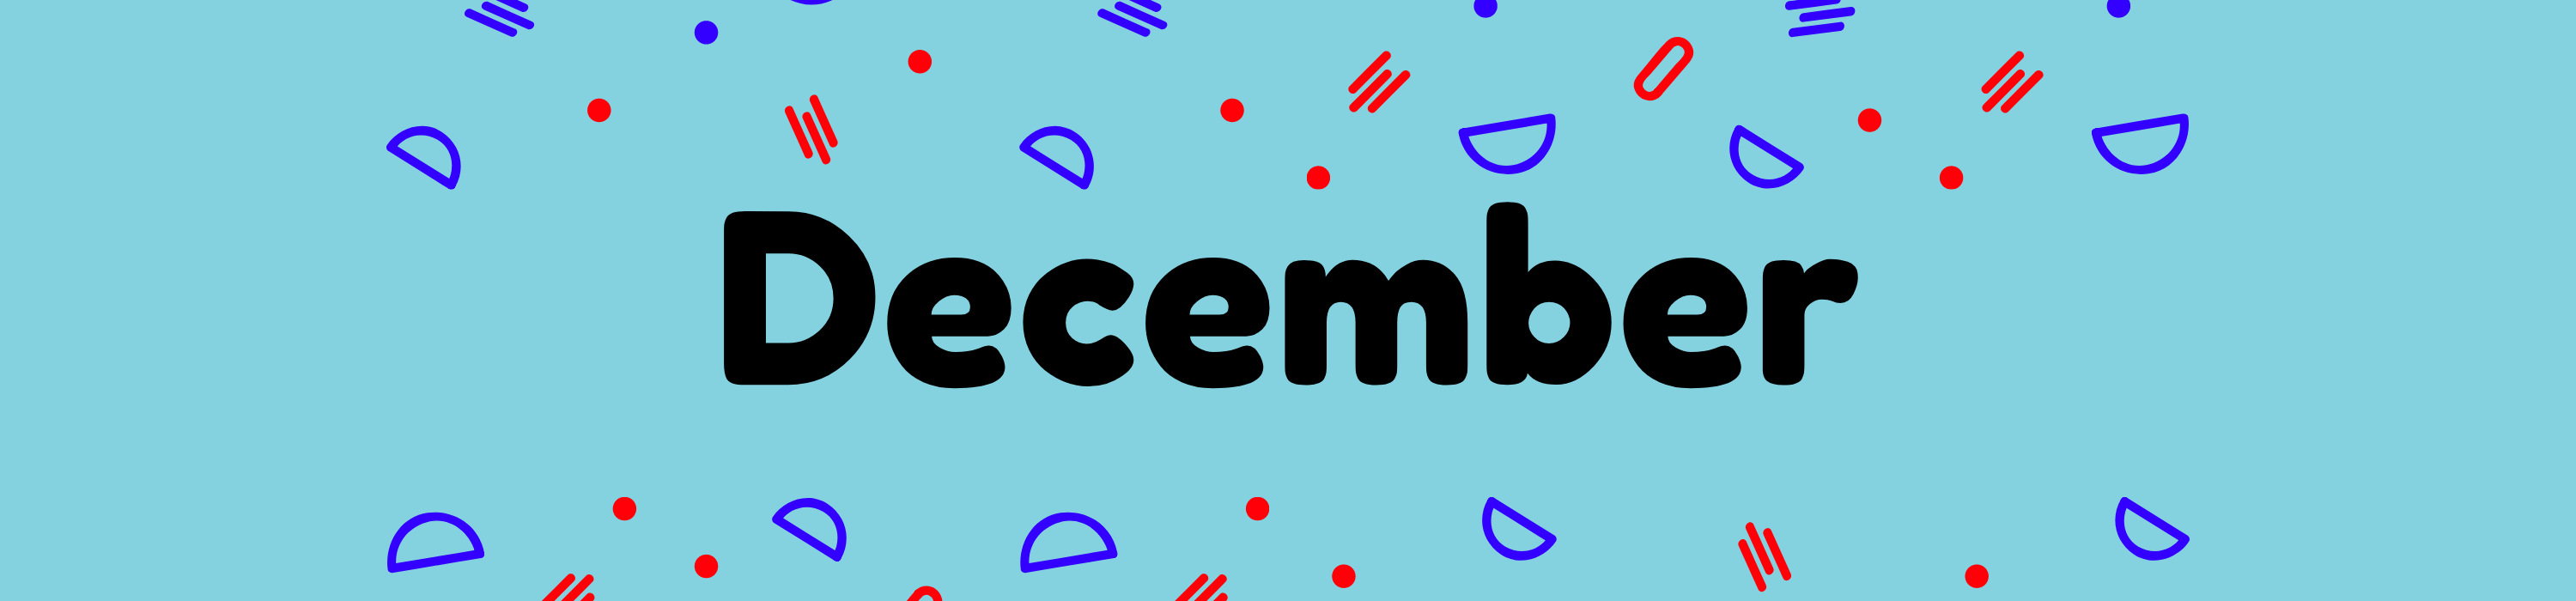 December-banner